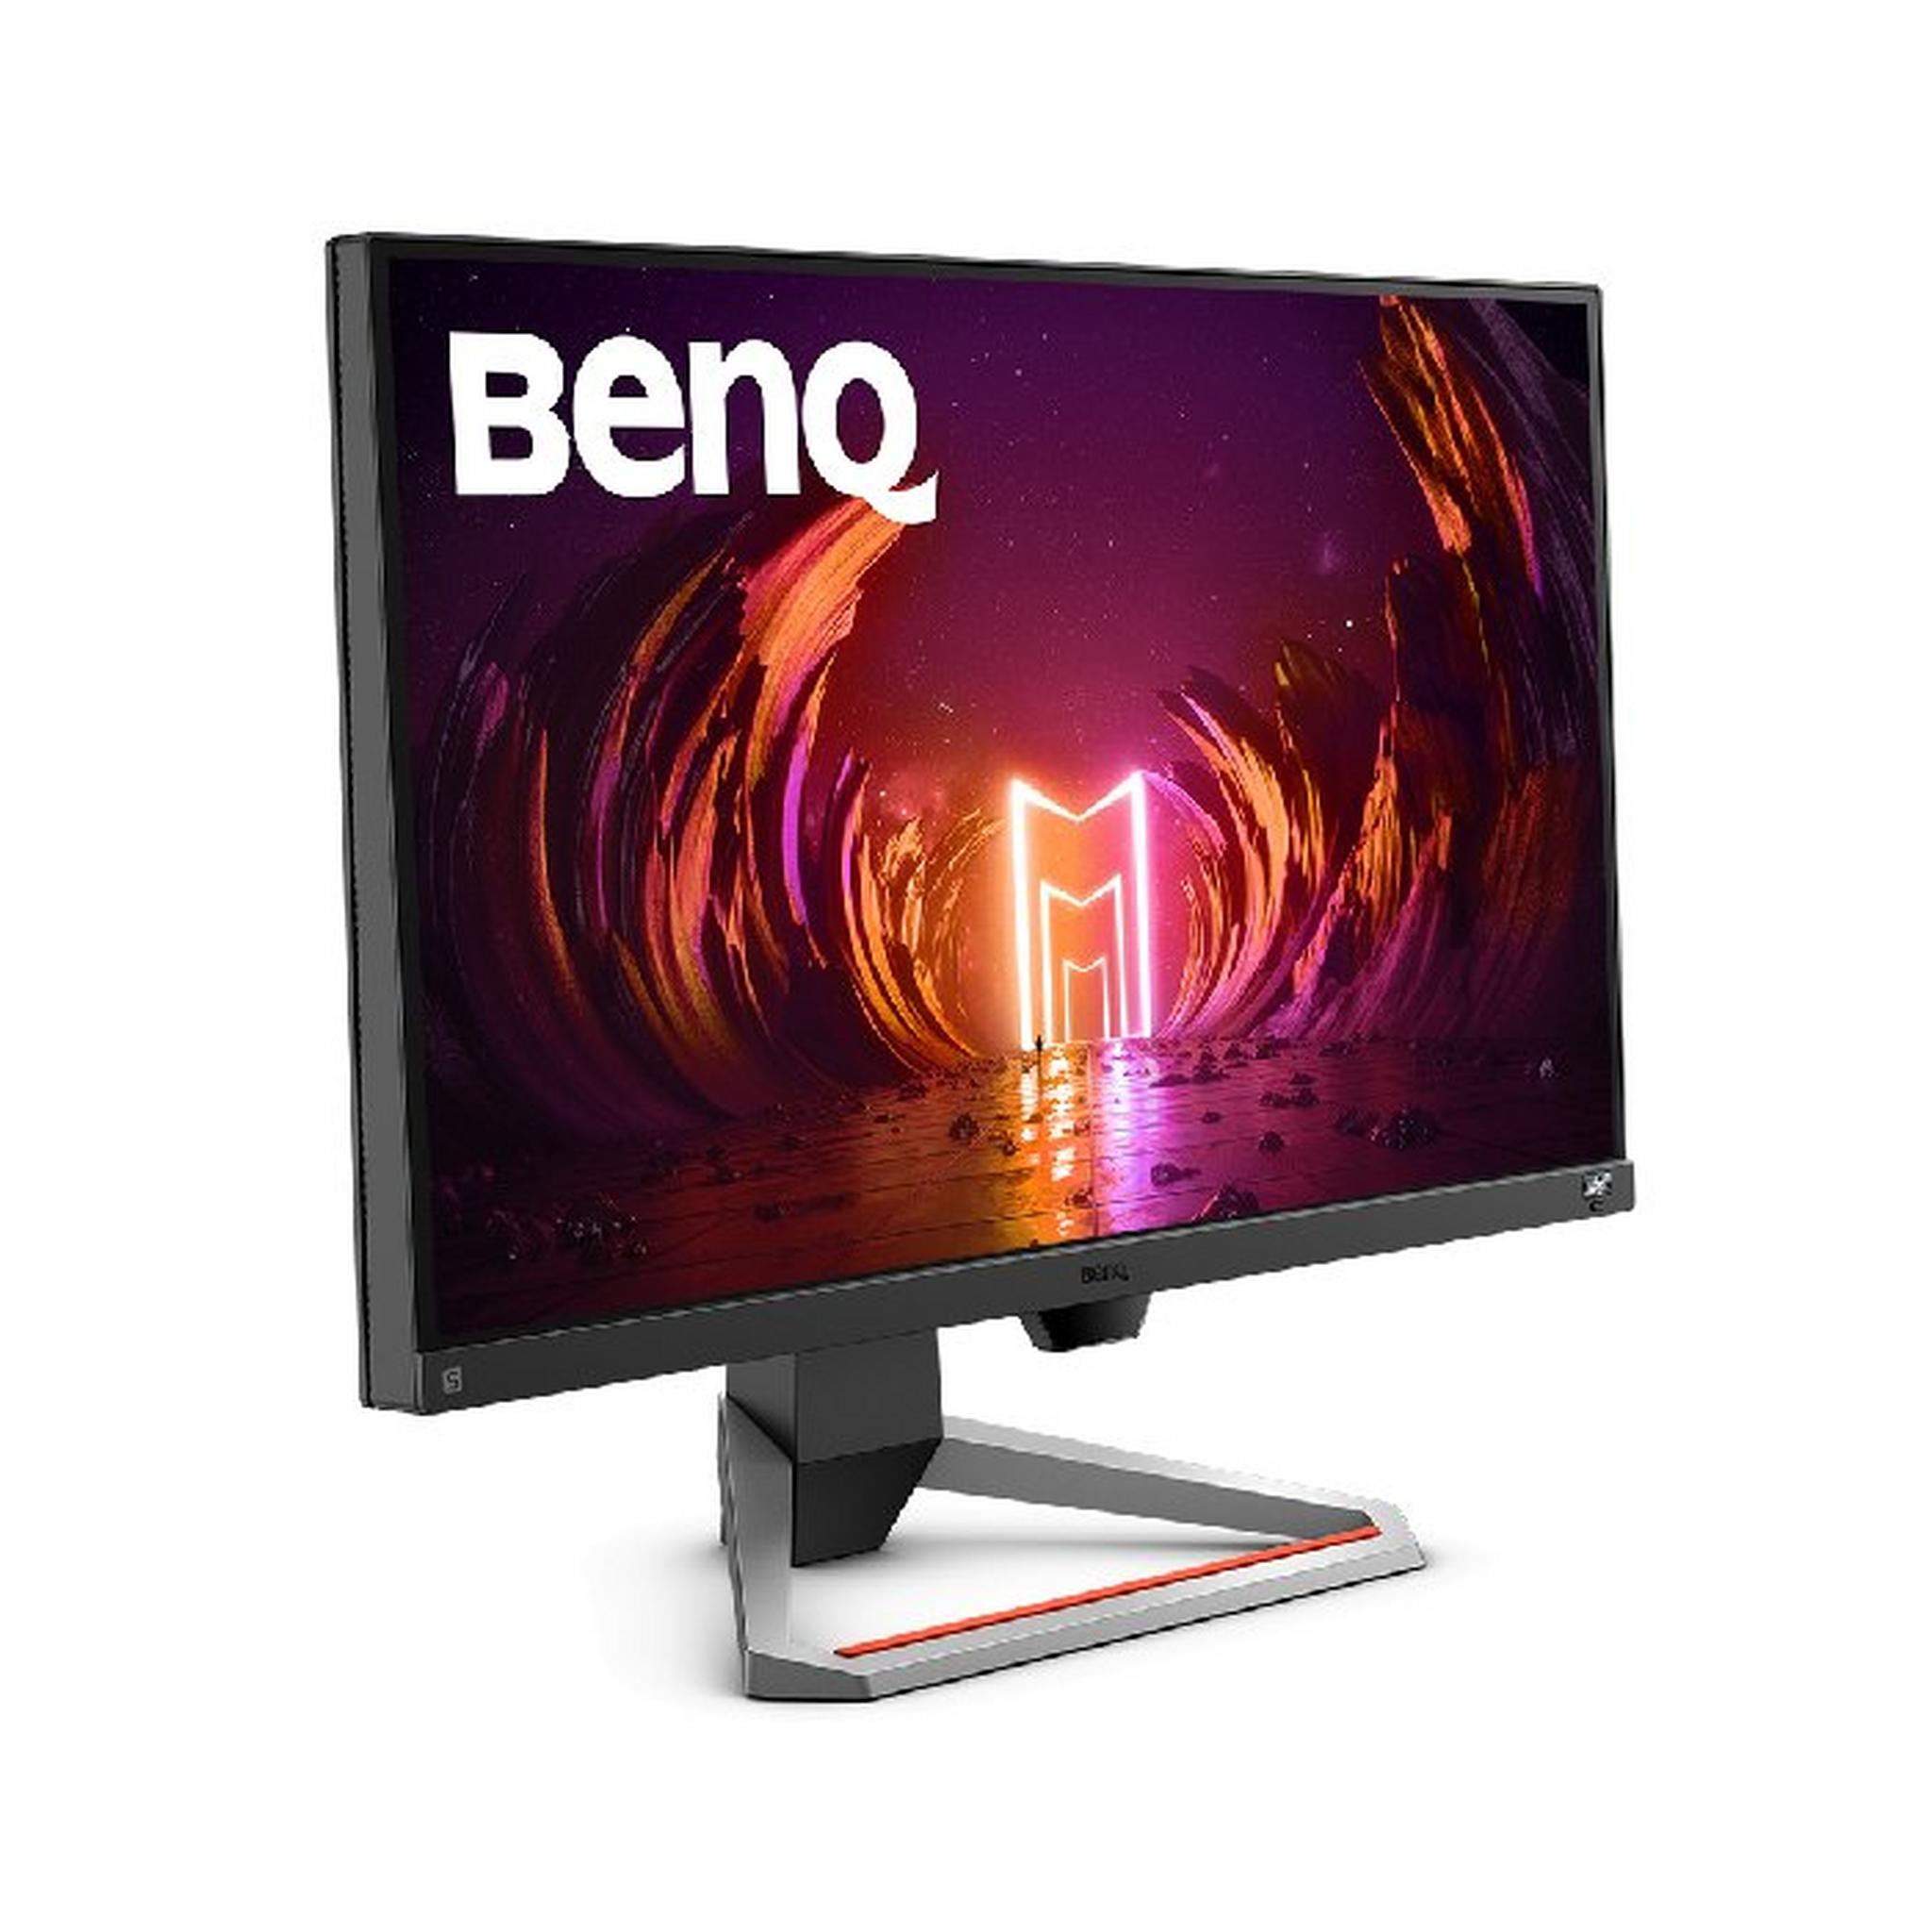 BenQ Mobiuz Gaming Computer Monitor, 25 Inch, 1920x1080 Full HD, EX2510S - Black